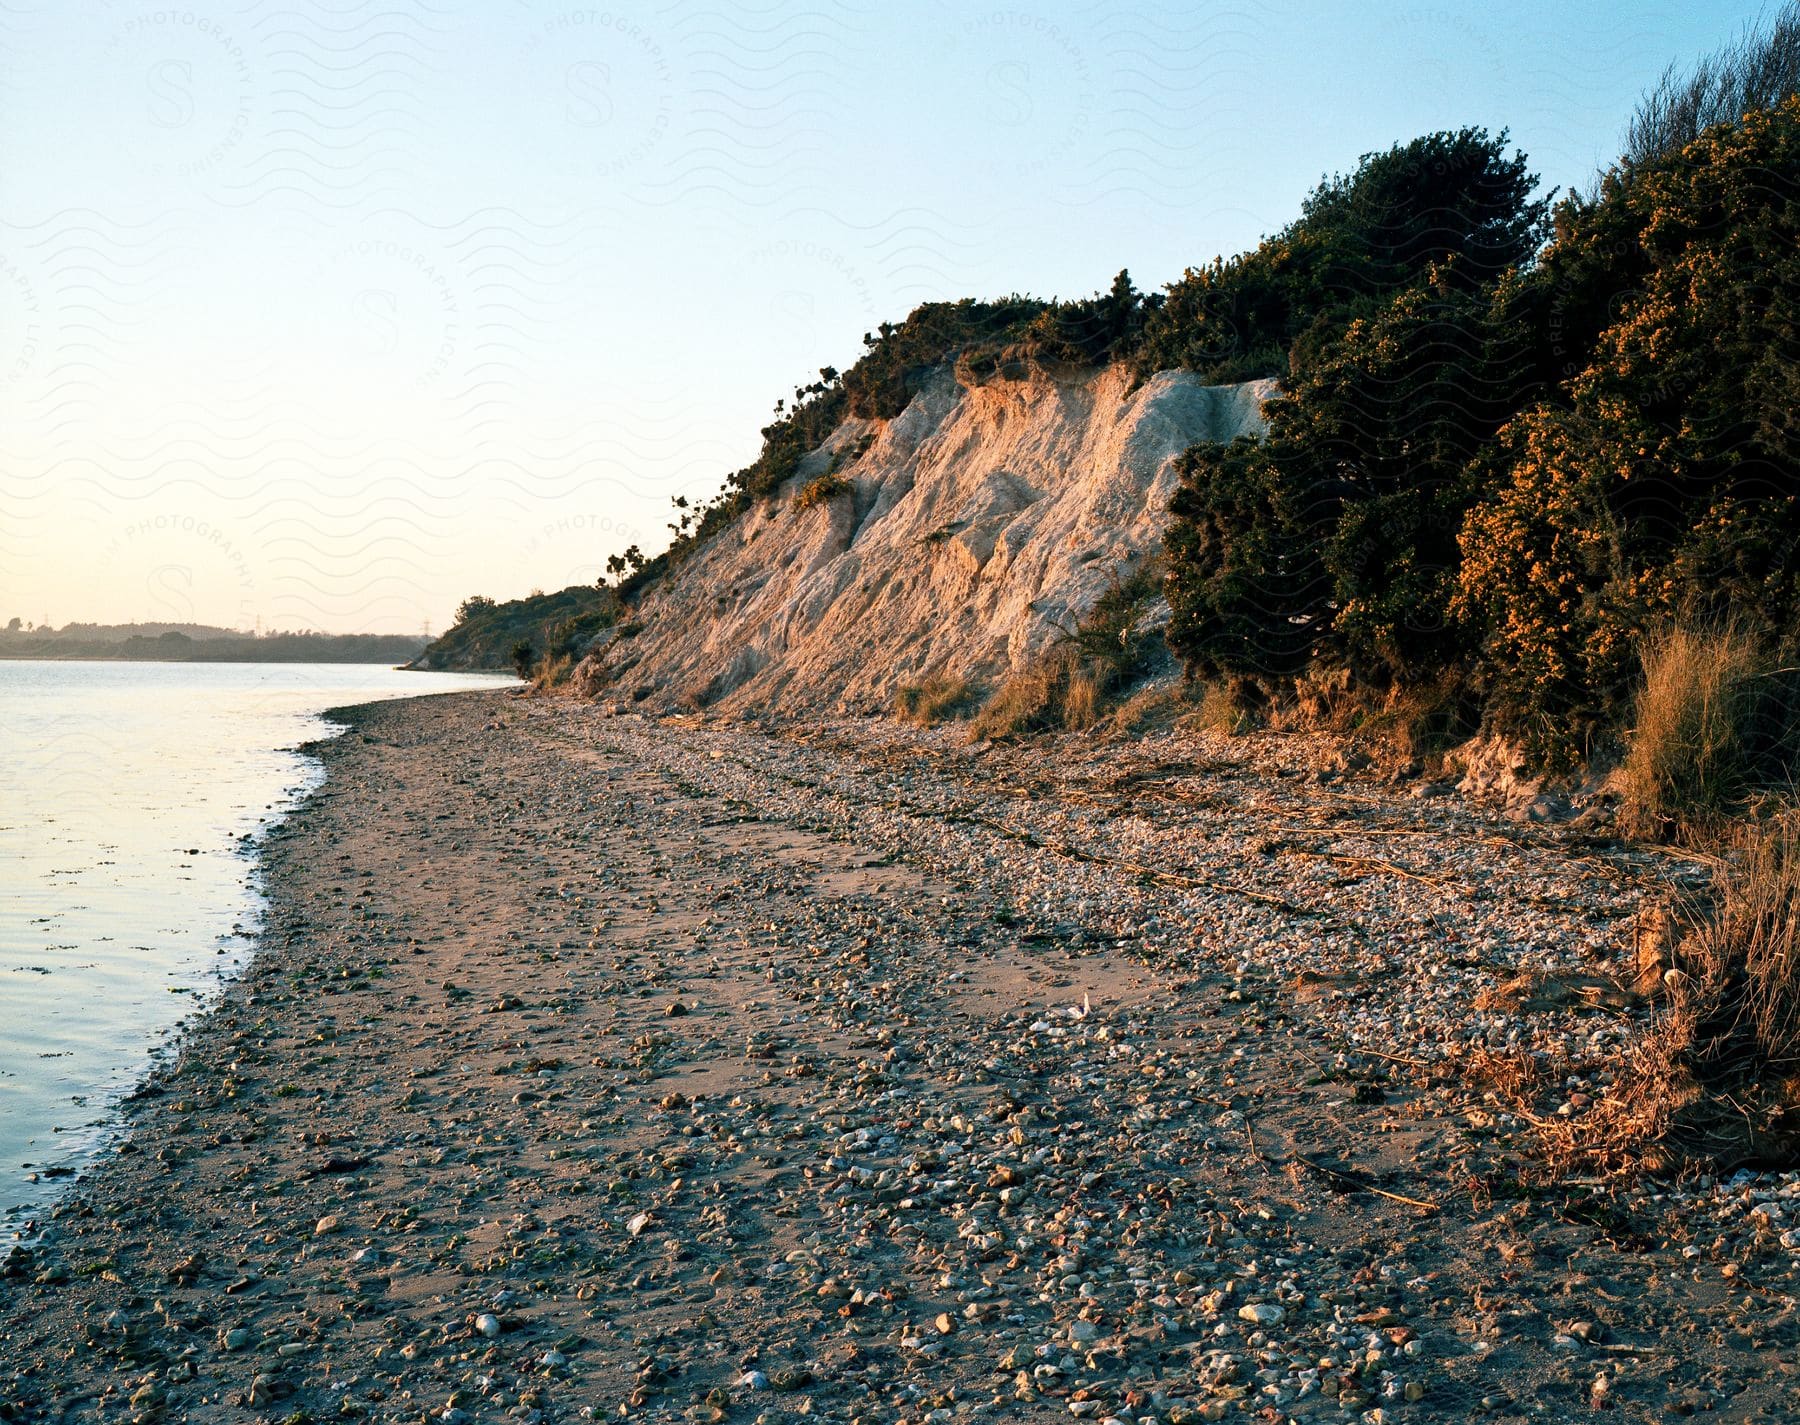 A serene coastal landscape with a rocky shoreline and a sandy beach